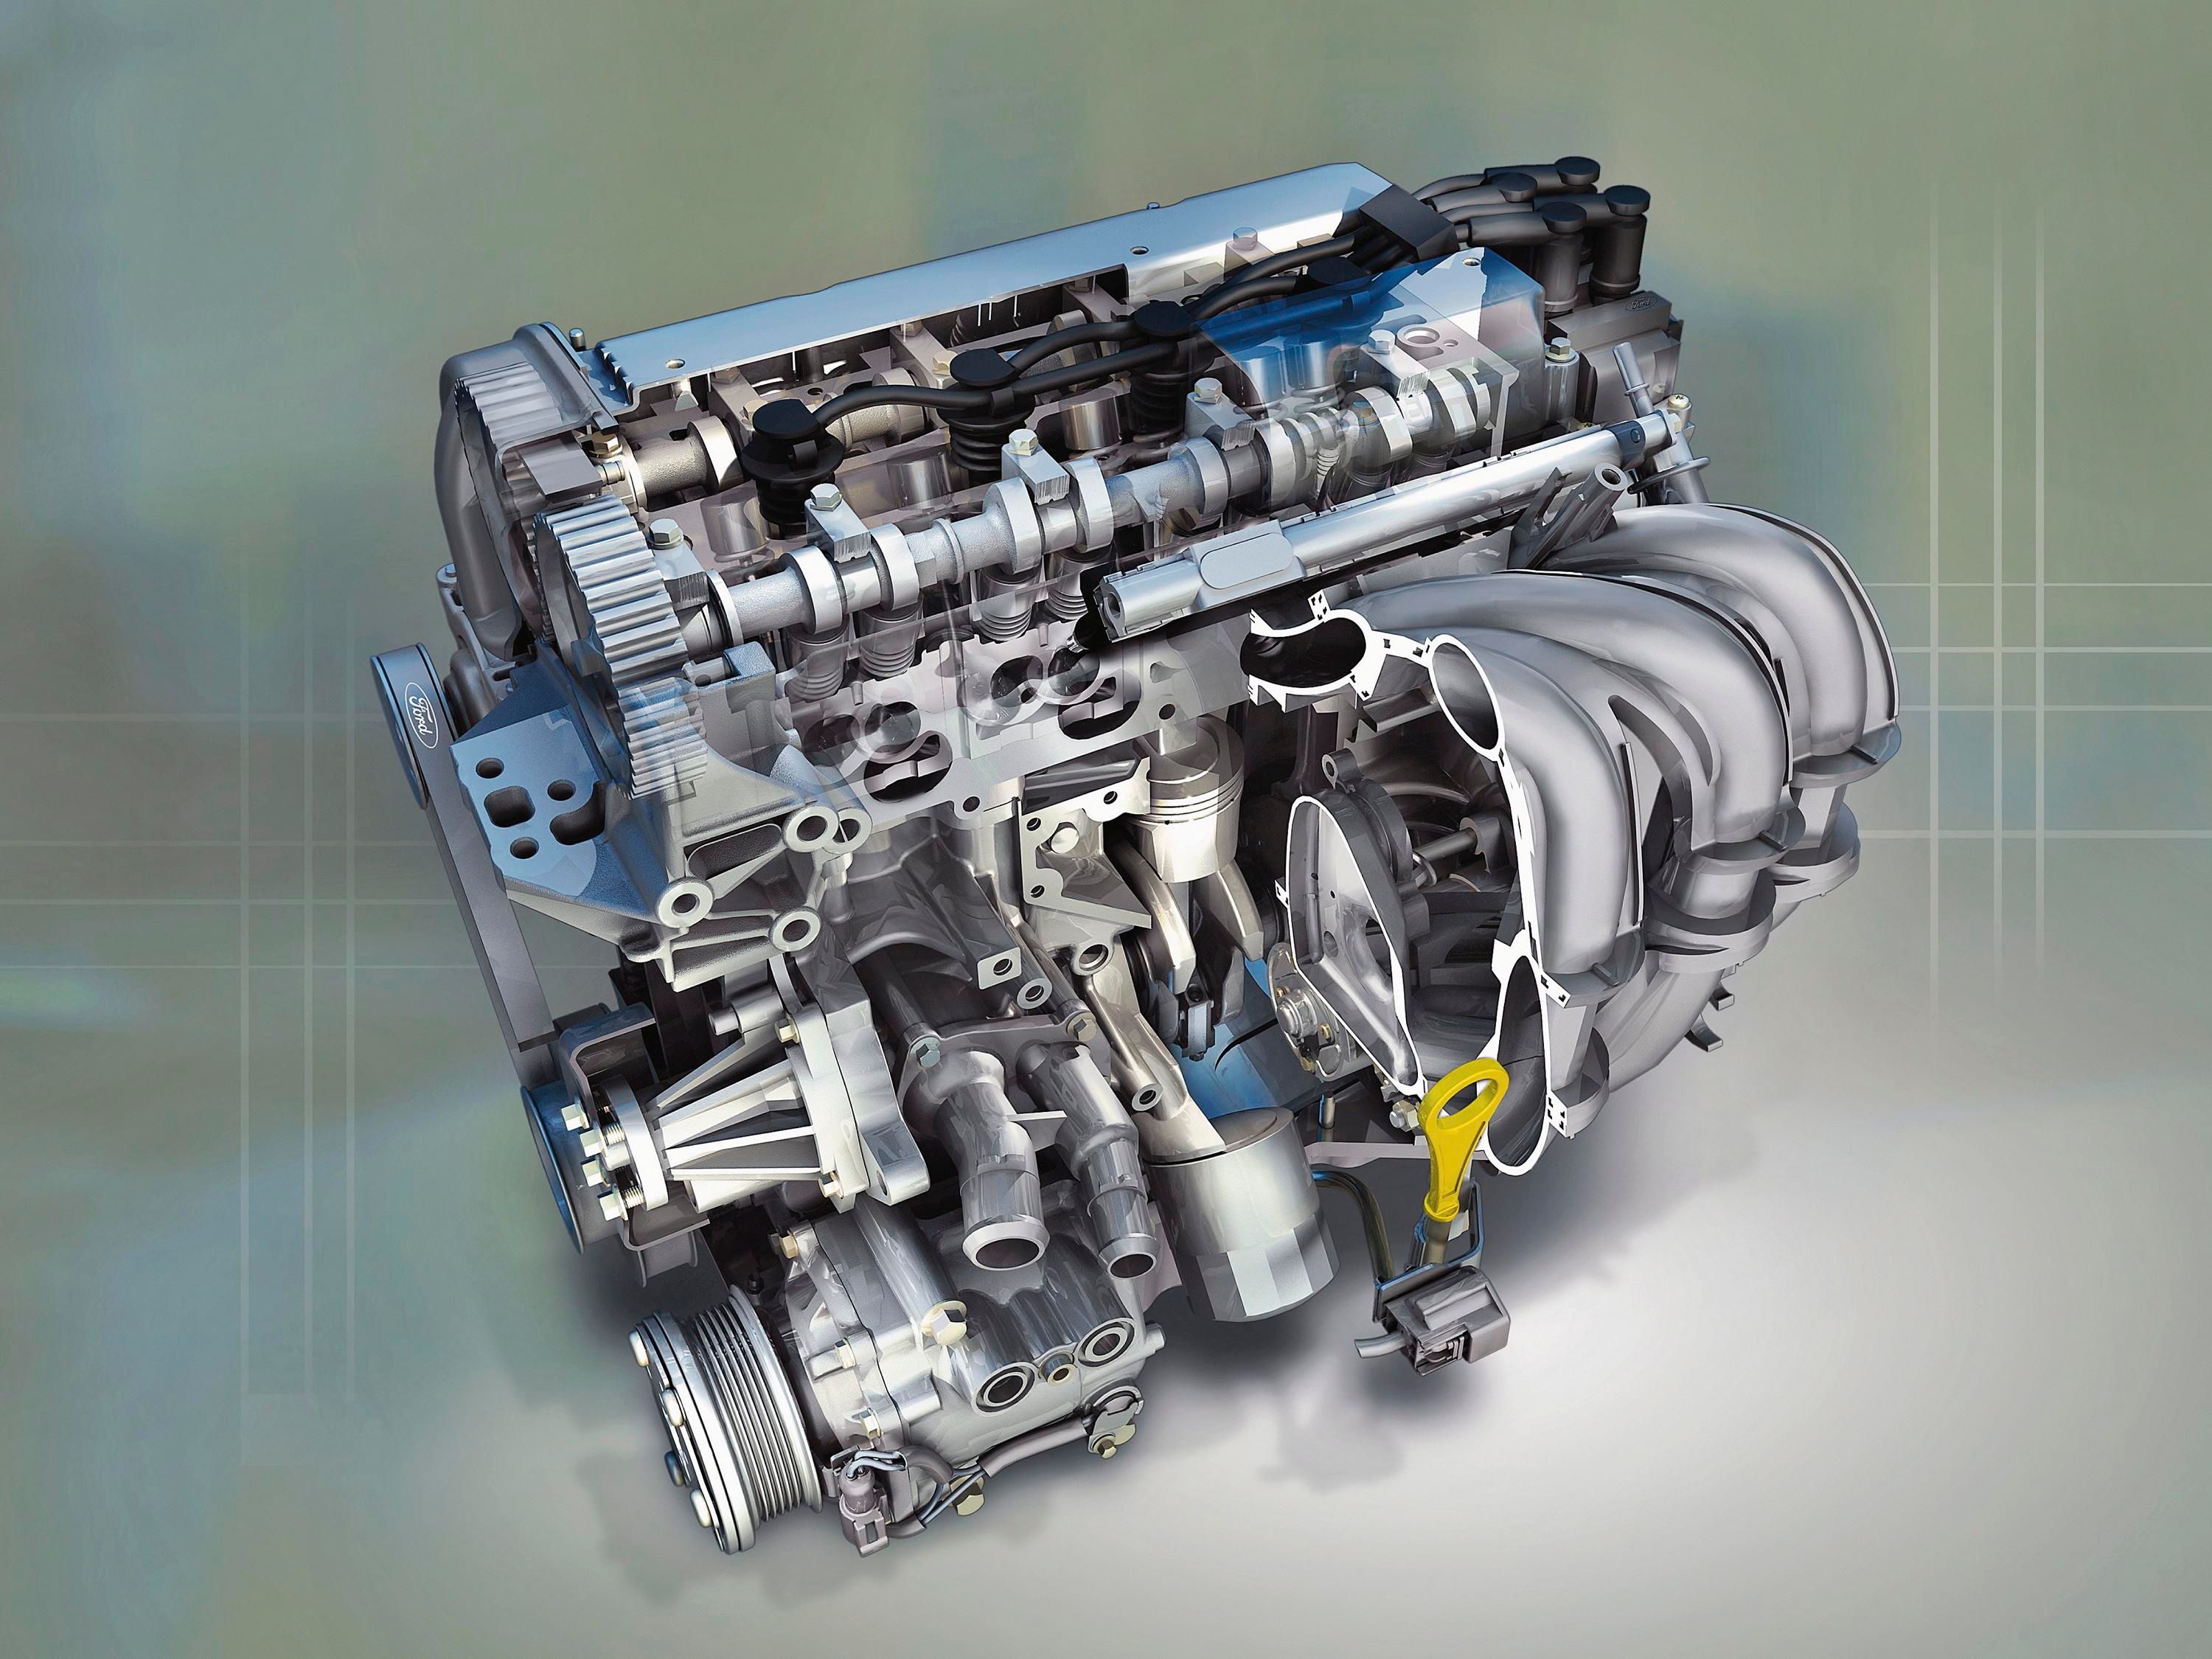 Duratec ti vct sigma. Двигатель Форд дюратек 2.0. Двигатель Форд Duratec 1.6. Двигатель Форд фокус 2 2.0. 1.6L Duratec ti-VCT (105ps) - Sigma.